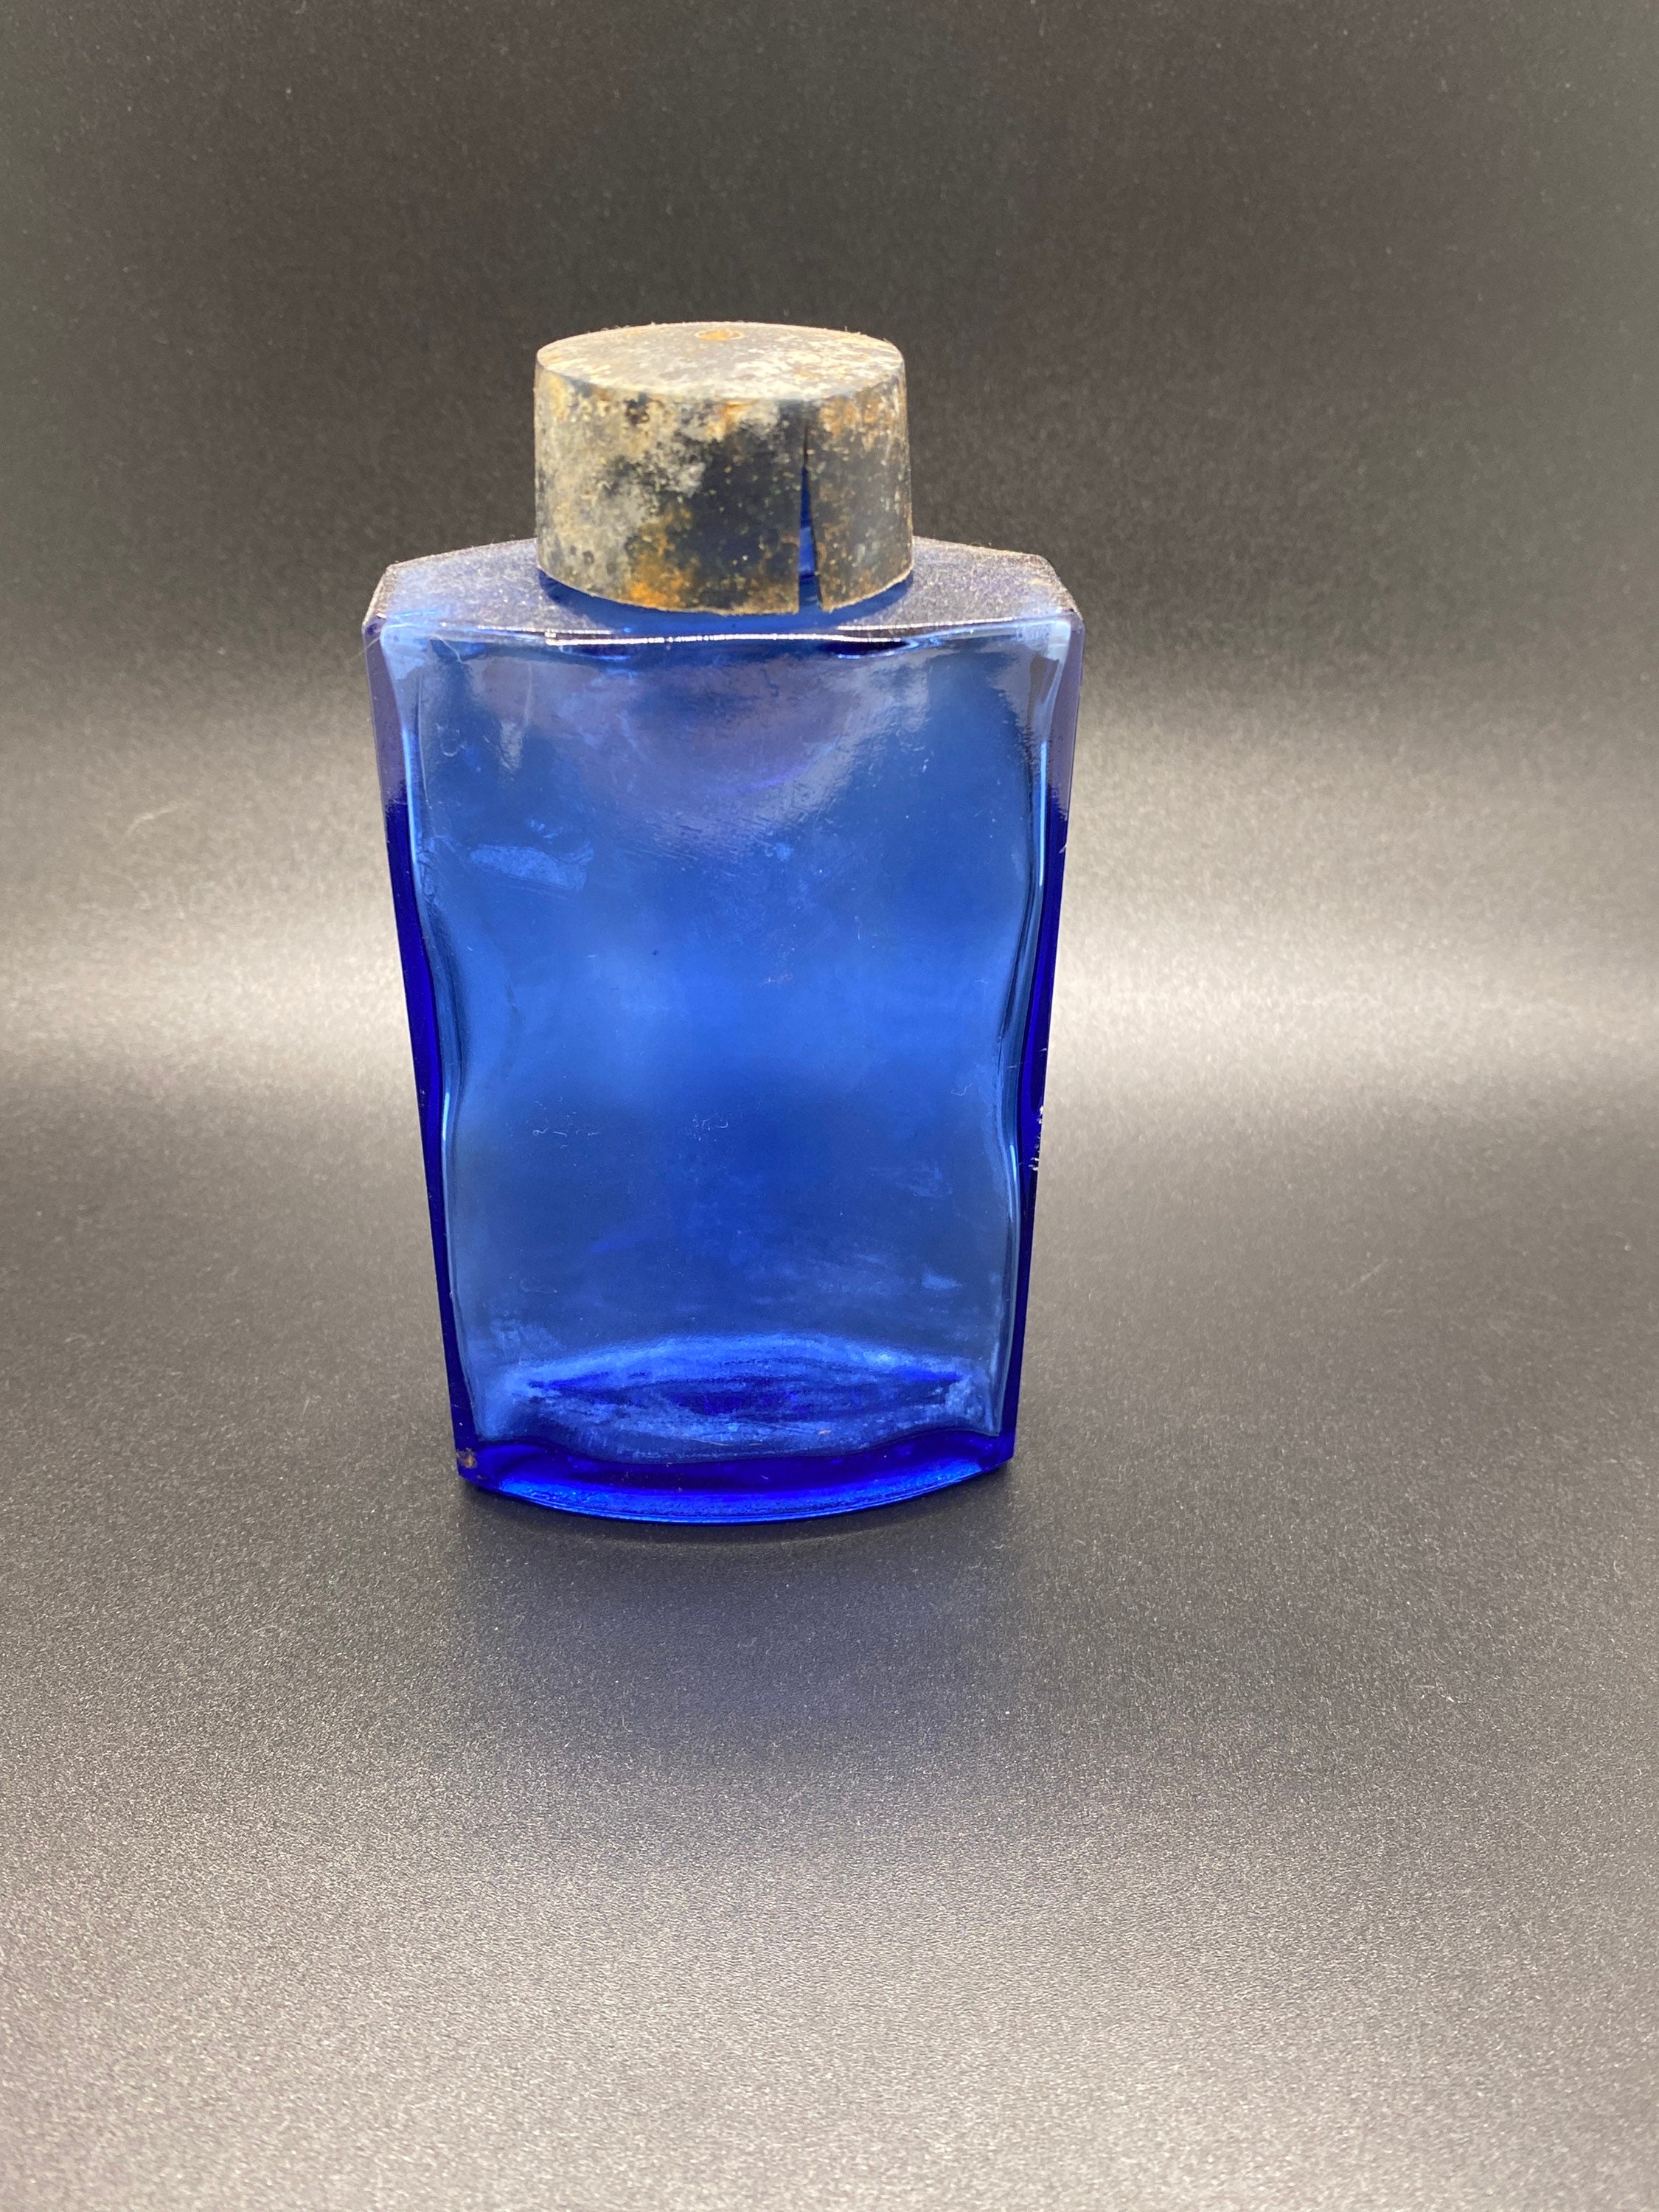 120 ML (22mm neck finish) Boston Round Cobalt Blue Glass Bottle - 128 units  @ $0.50 per bottle